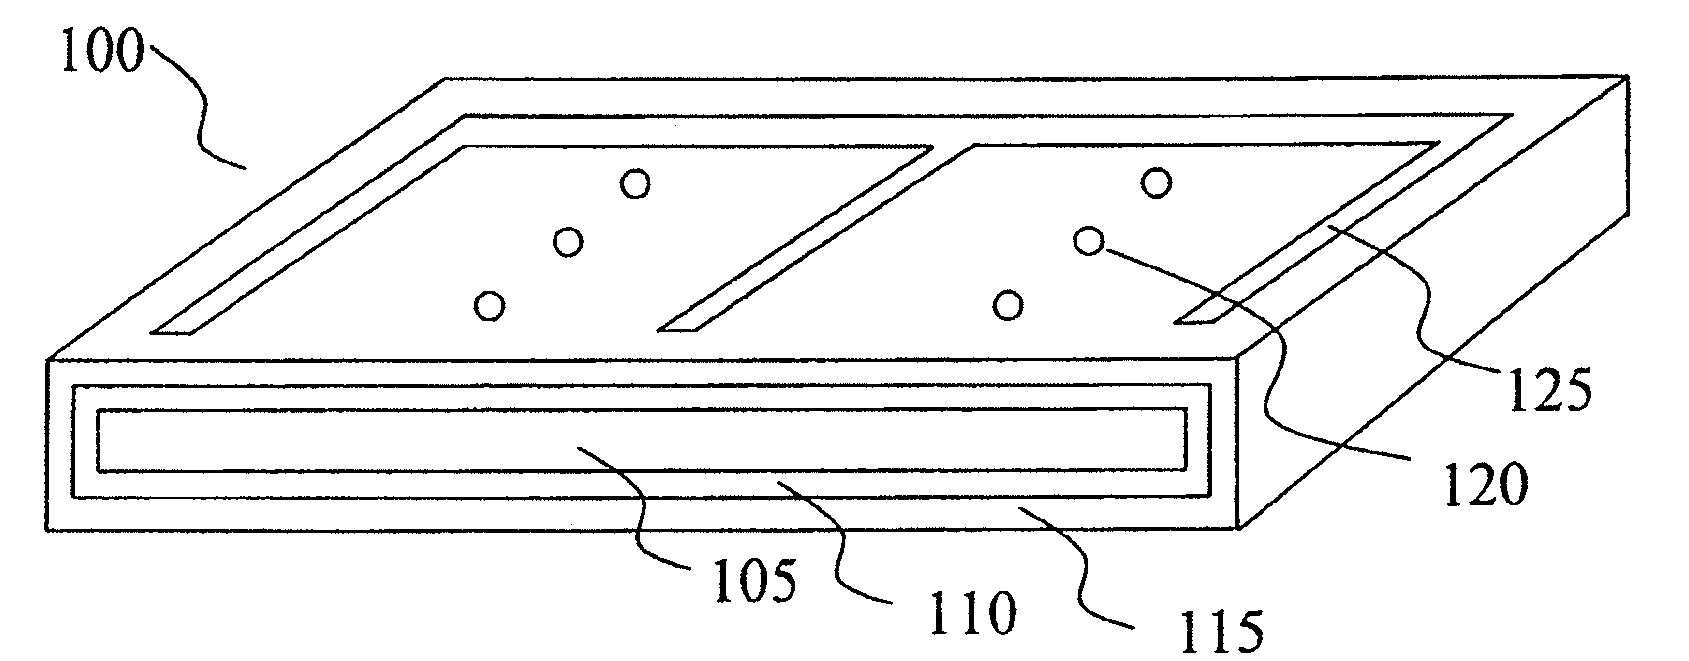 Method of forming openings in selected material